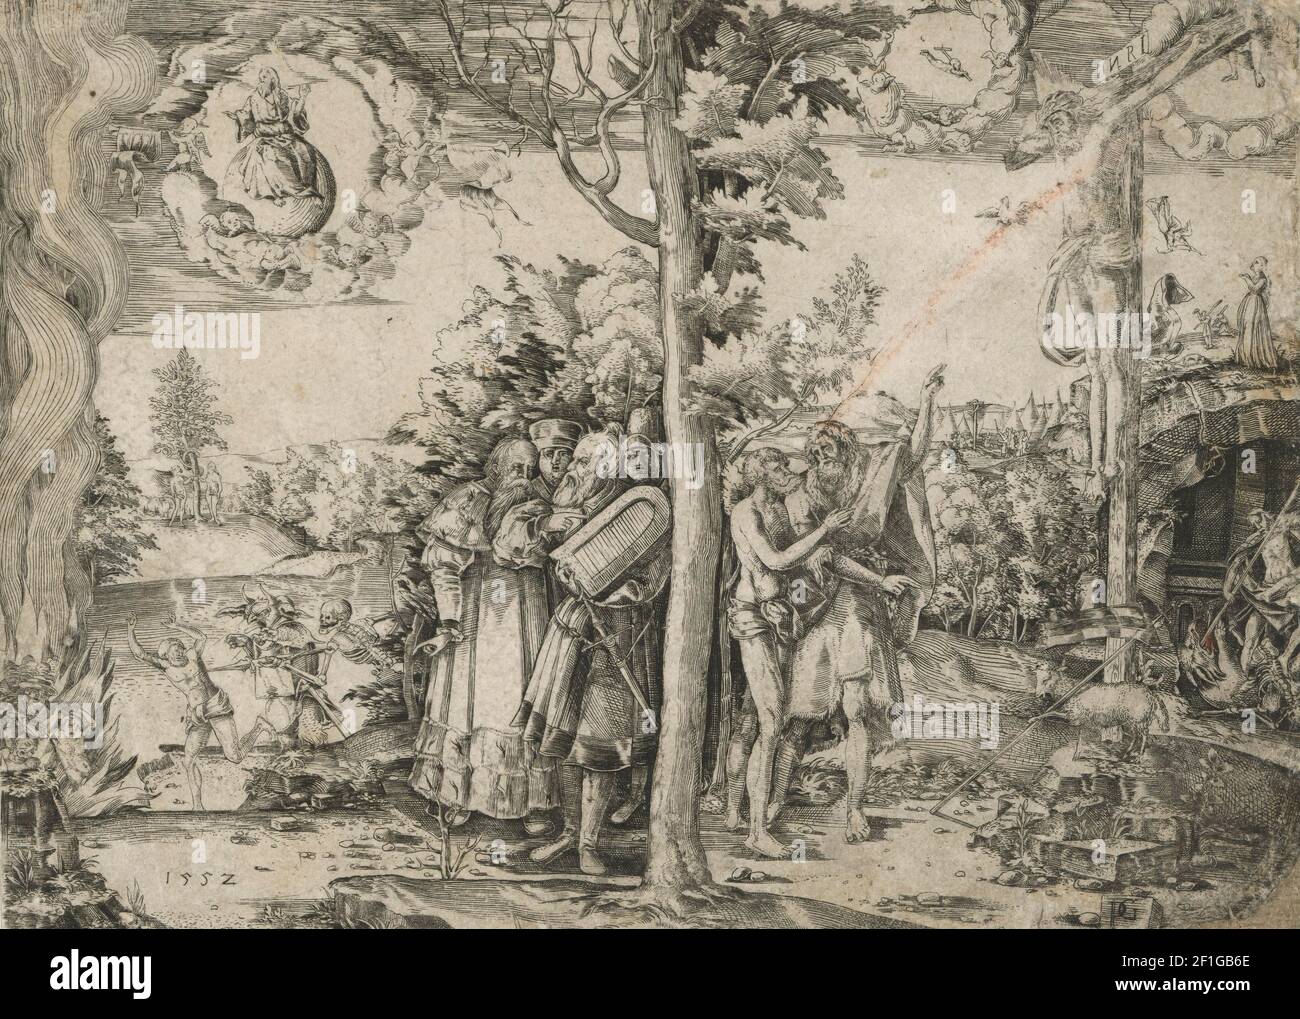 Peter Rodelstedt - Allegorie auf die Erlösung (1552) Banque D'Images